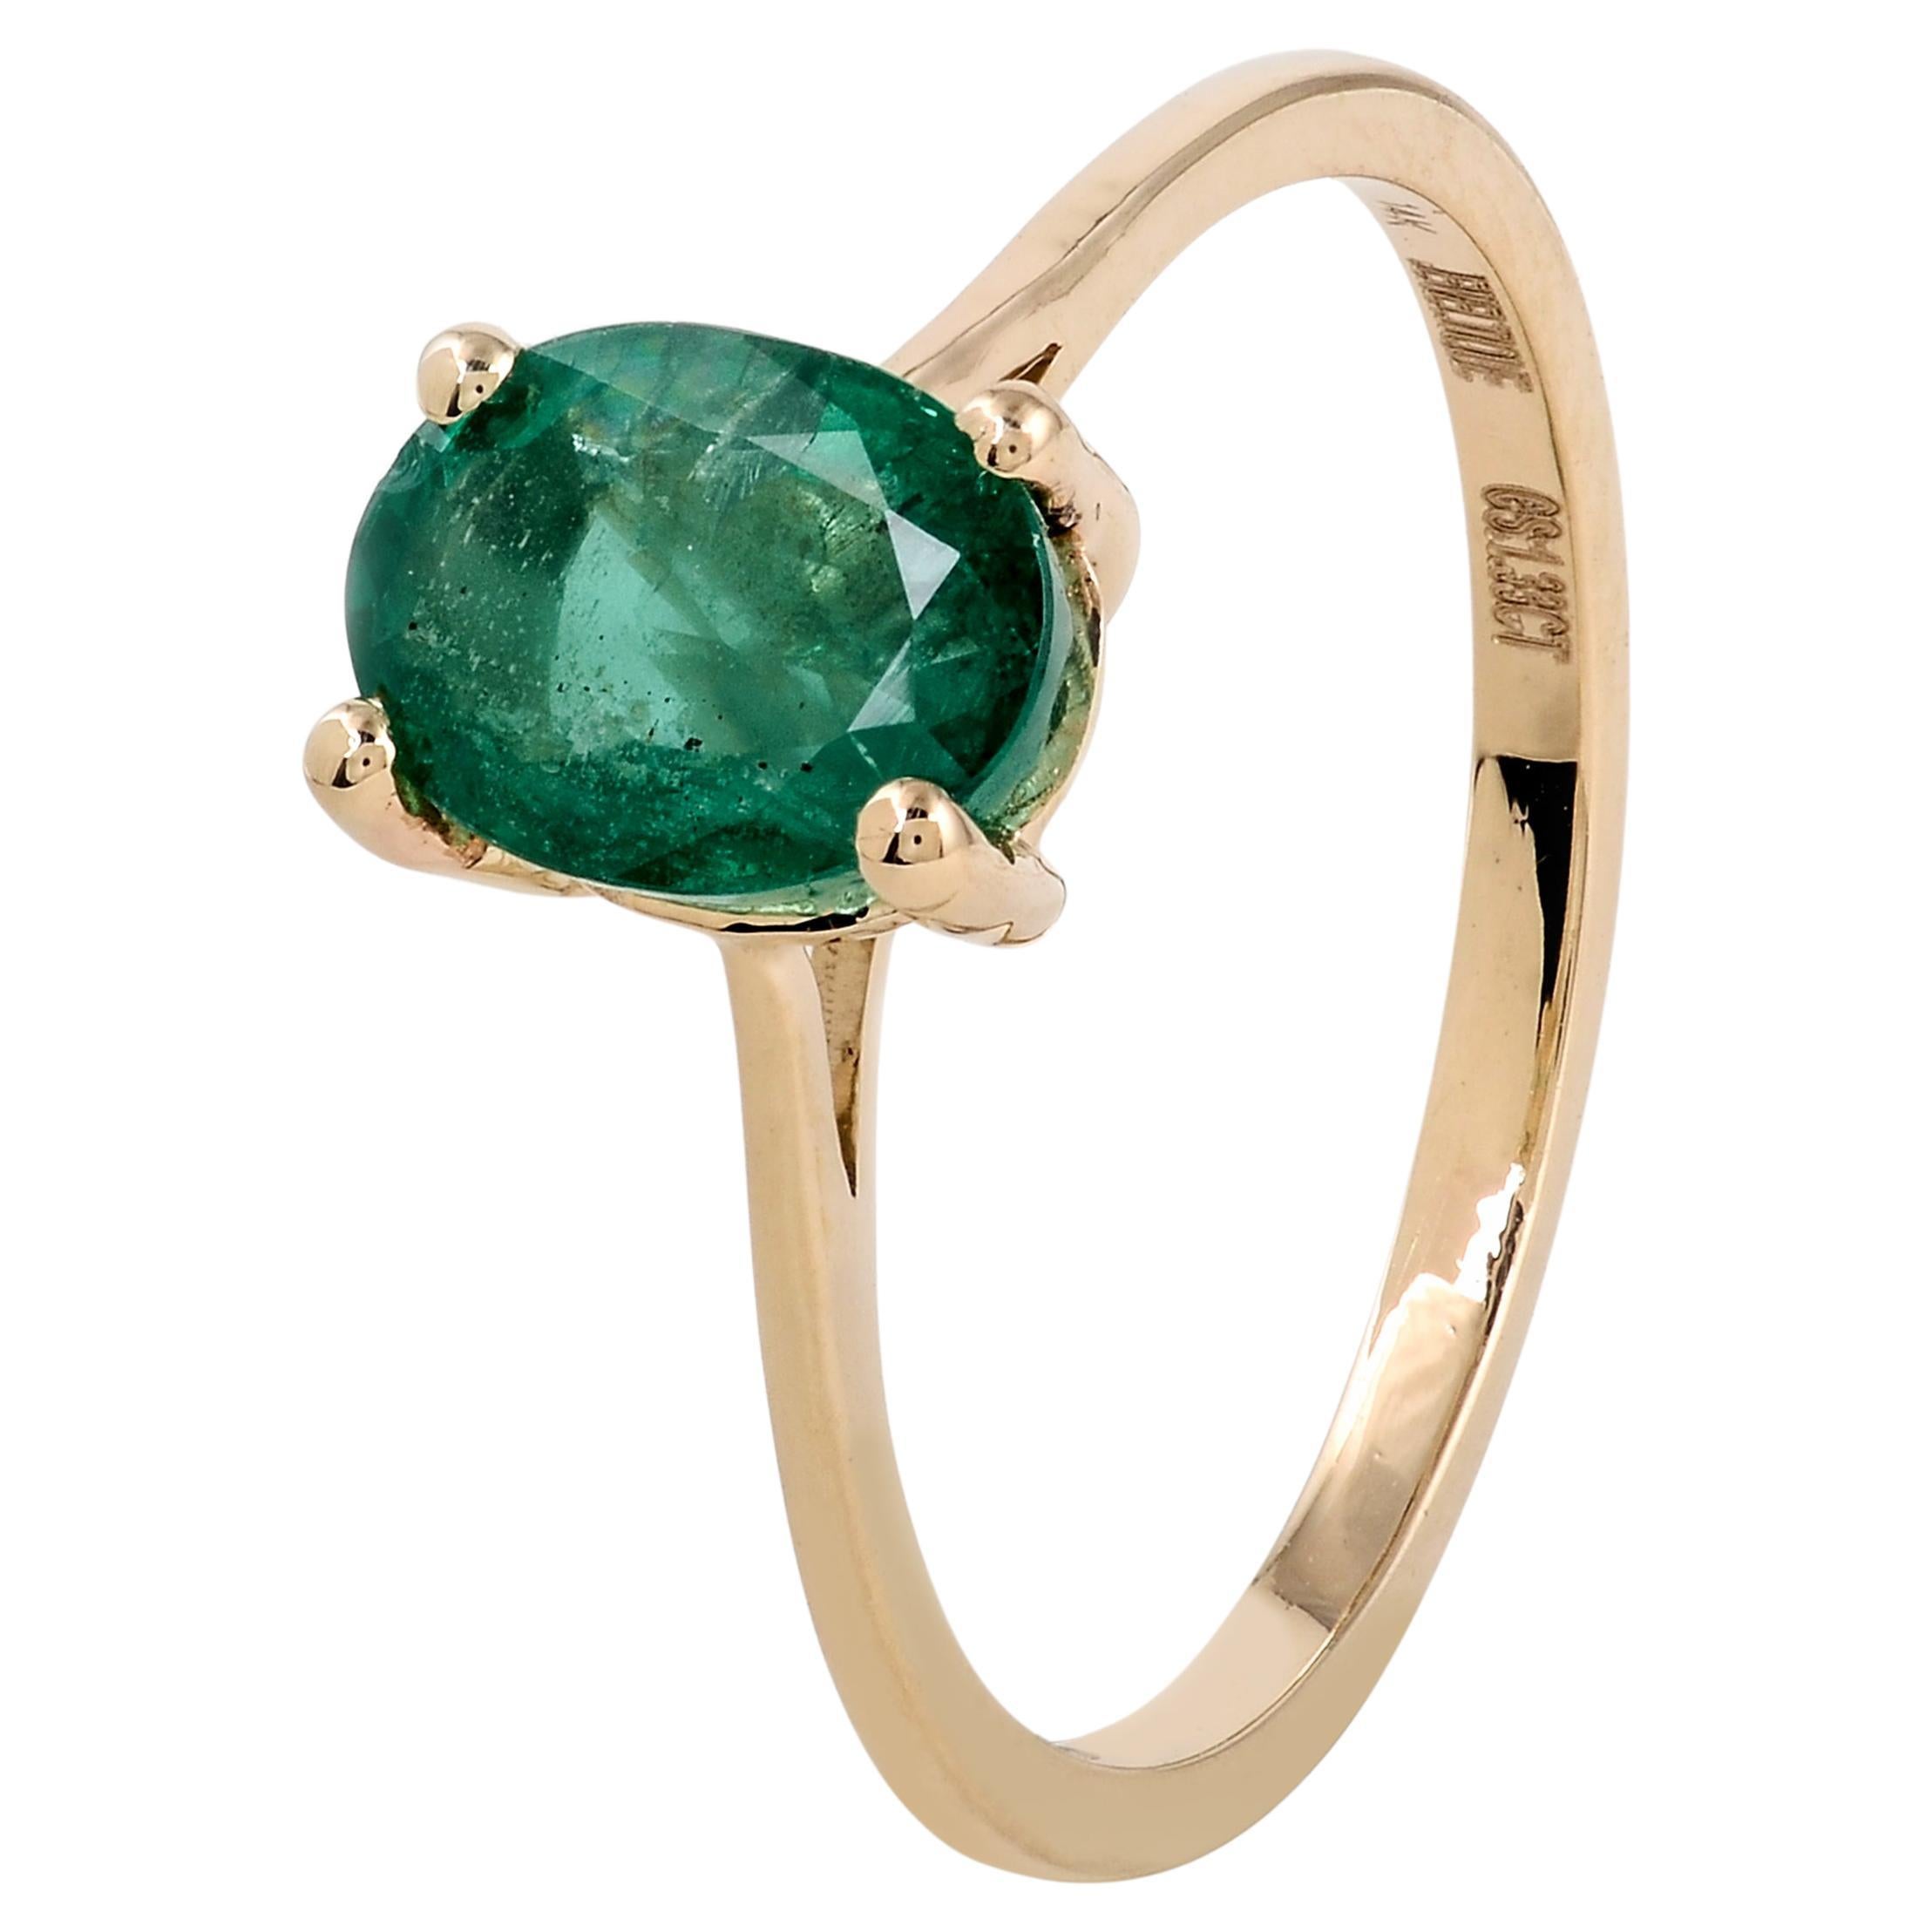 Elegant 14K 1.33ct Emerald Cocktail Ring, Size 7 - Timeless & Elegant Jewelry